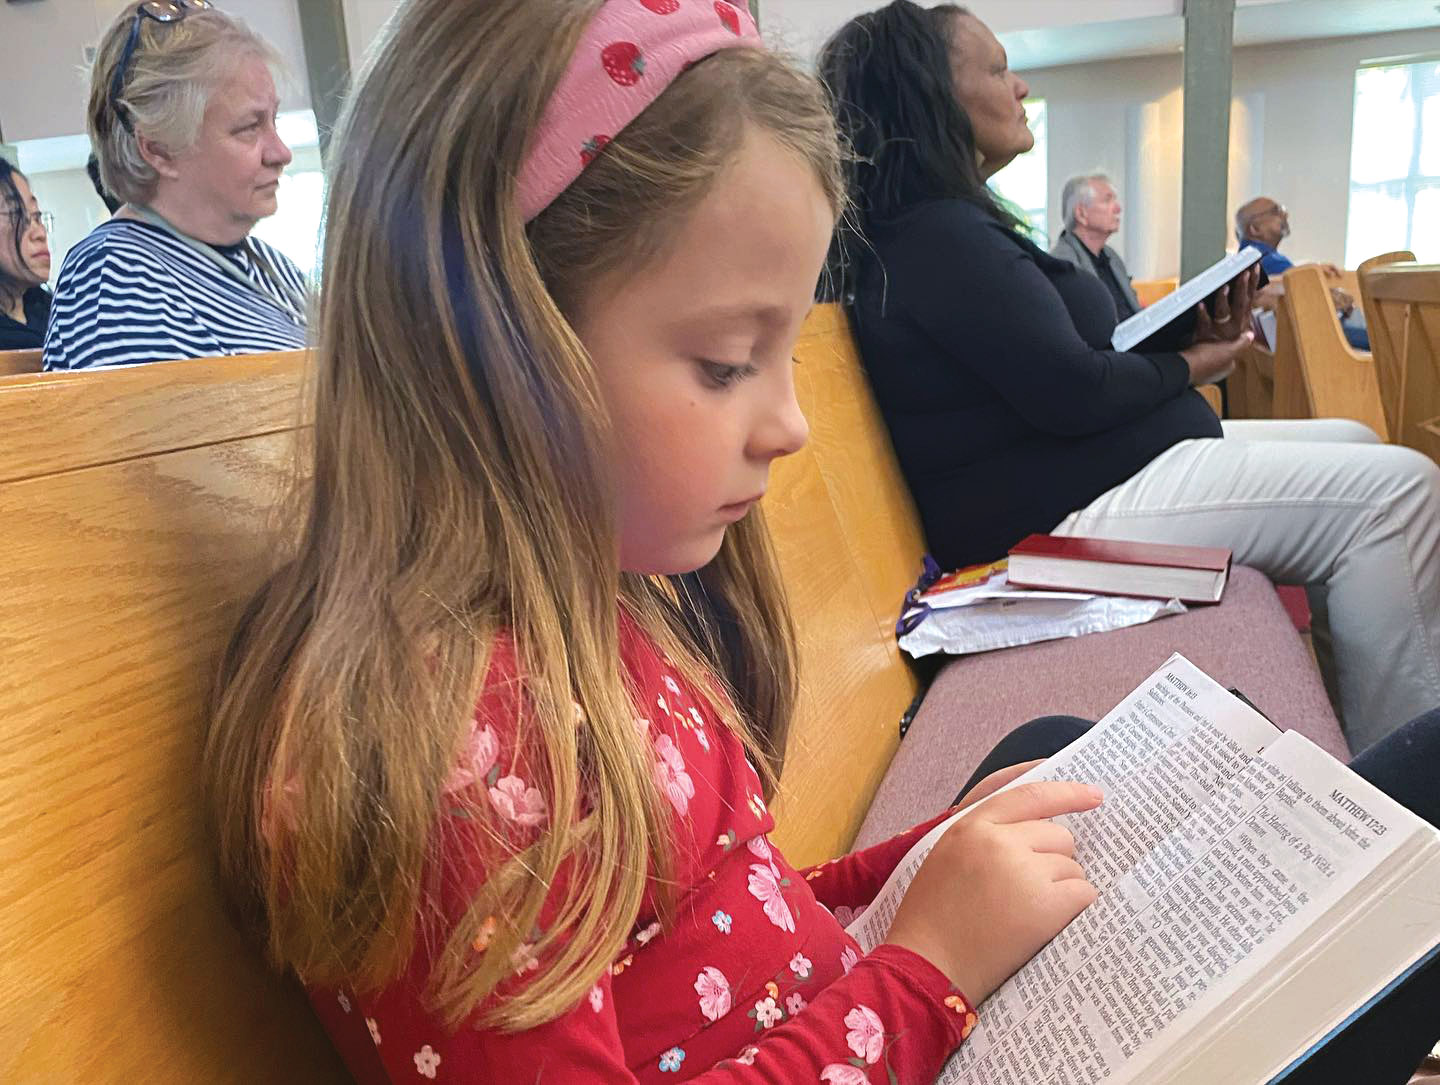 Little girl in church pew reading